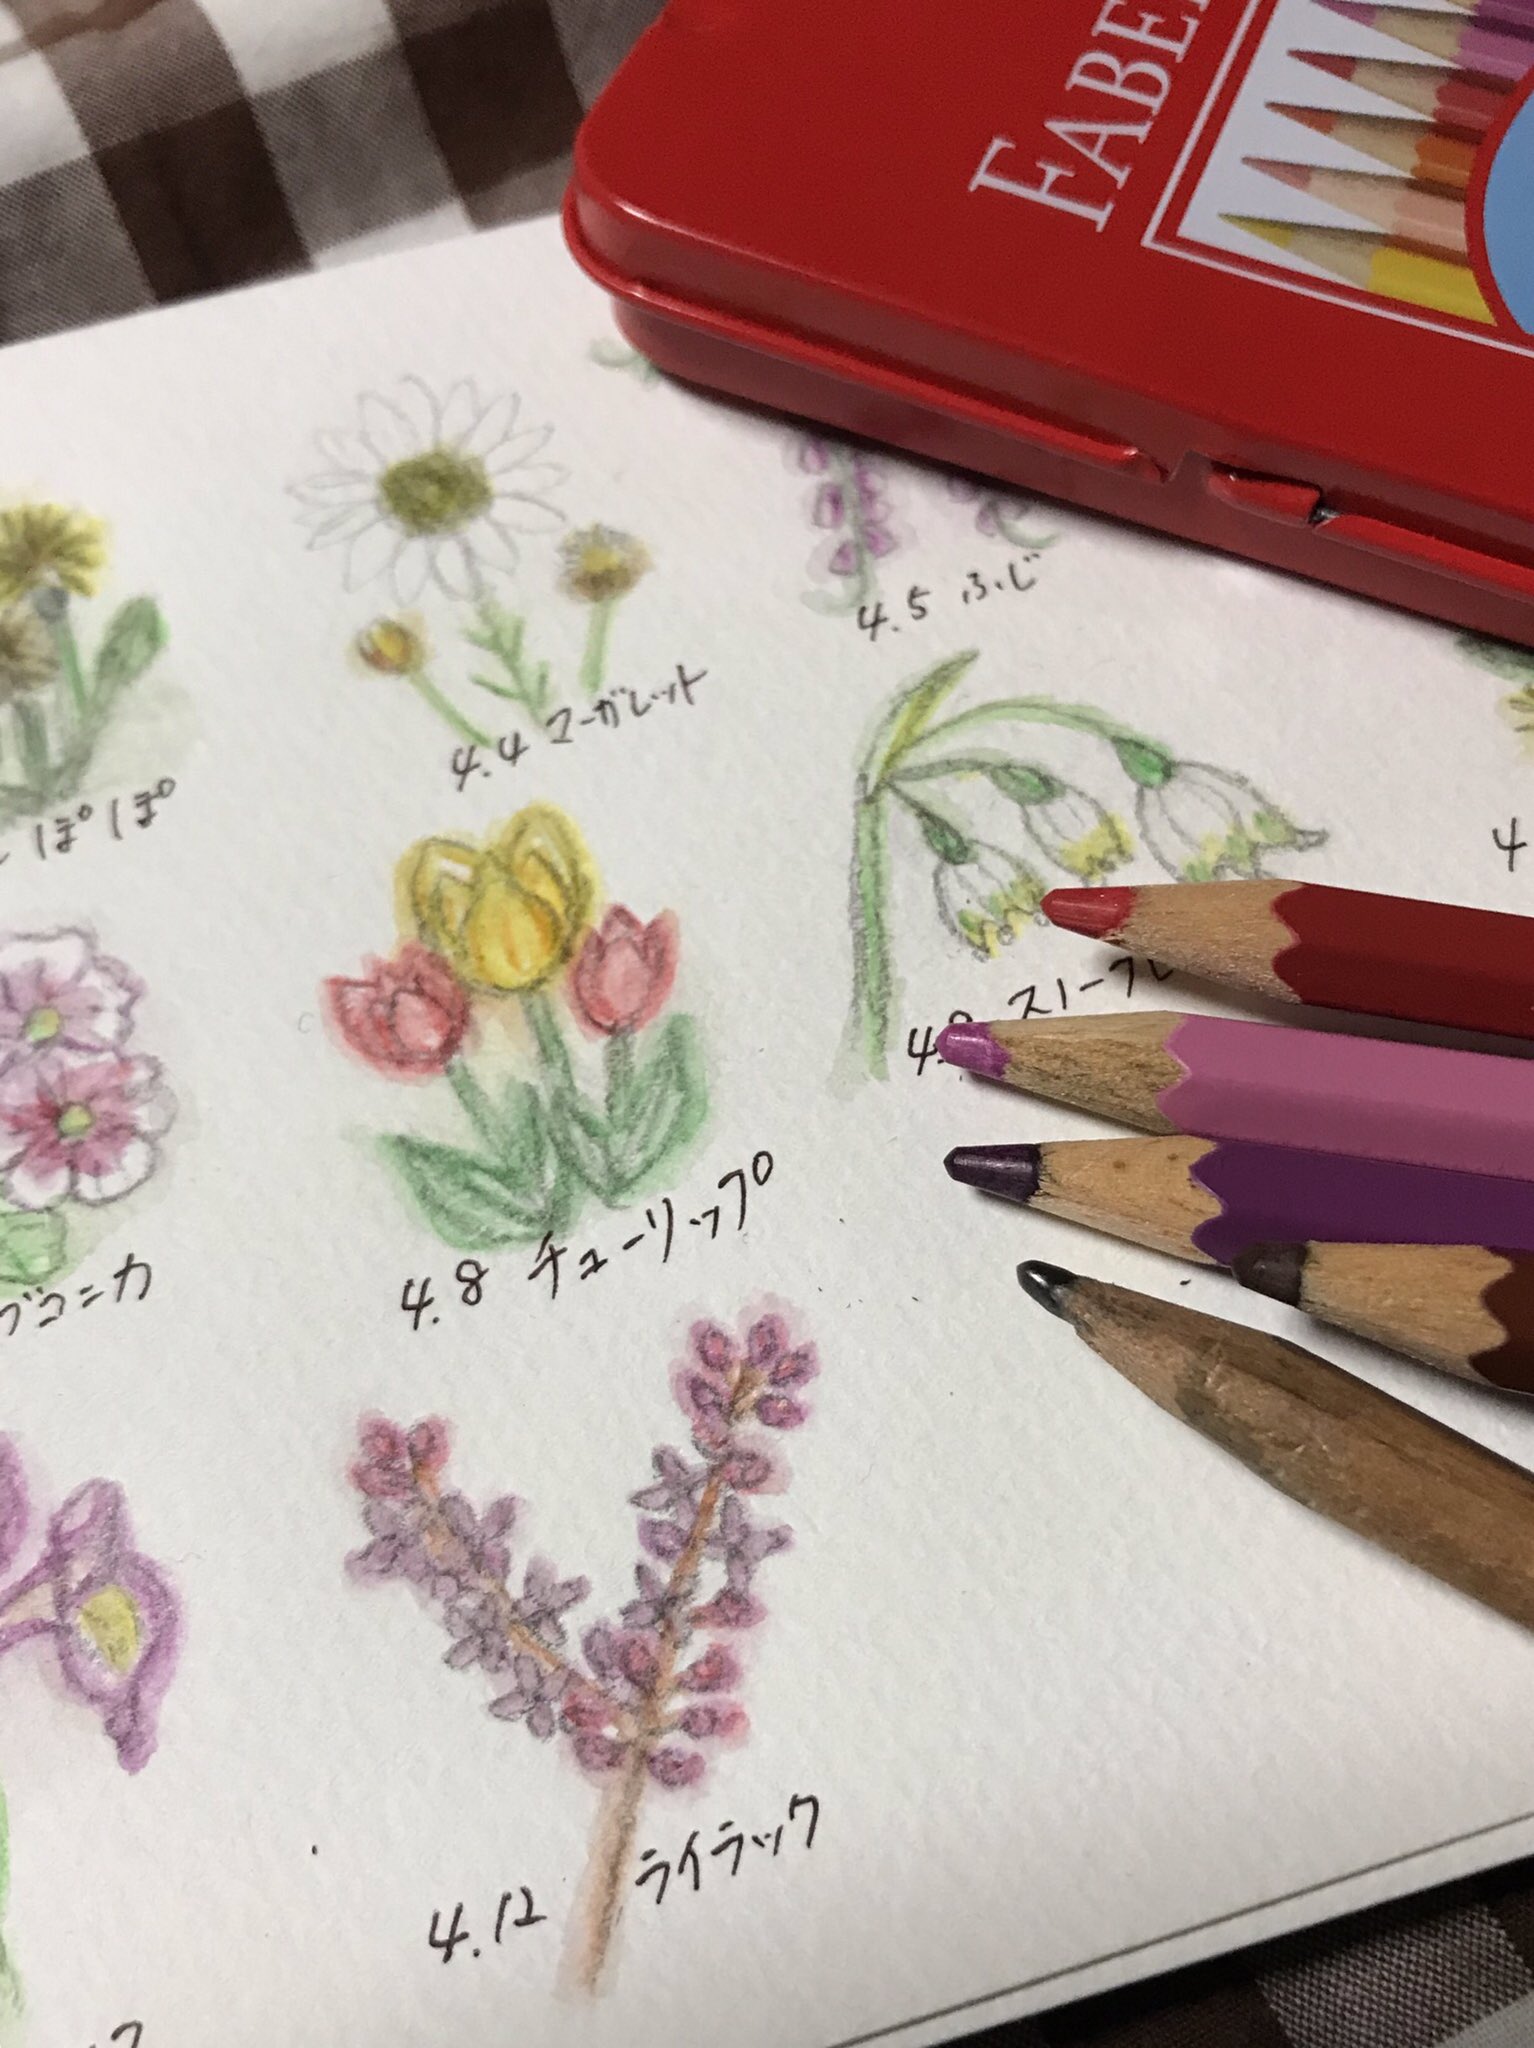 Atelier M Sur Twitter Birthday Flowers 4月12日の誕生花は ライラック 花言葉は 初恋の思い出 友情 など お誕生日の皆さん おめでとうございす スノーフレークの 刺繍 が完成しました 4月12日誕生日 おめでとう 誕生花 ライラック 花言葉